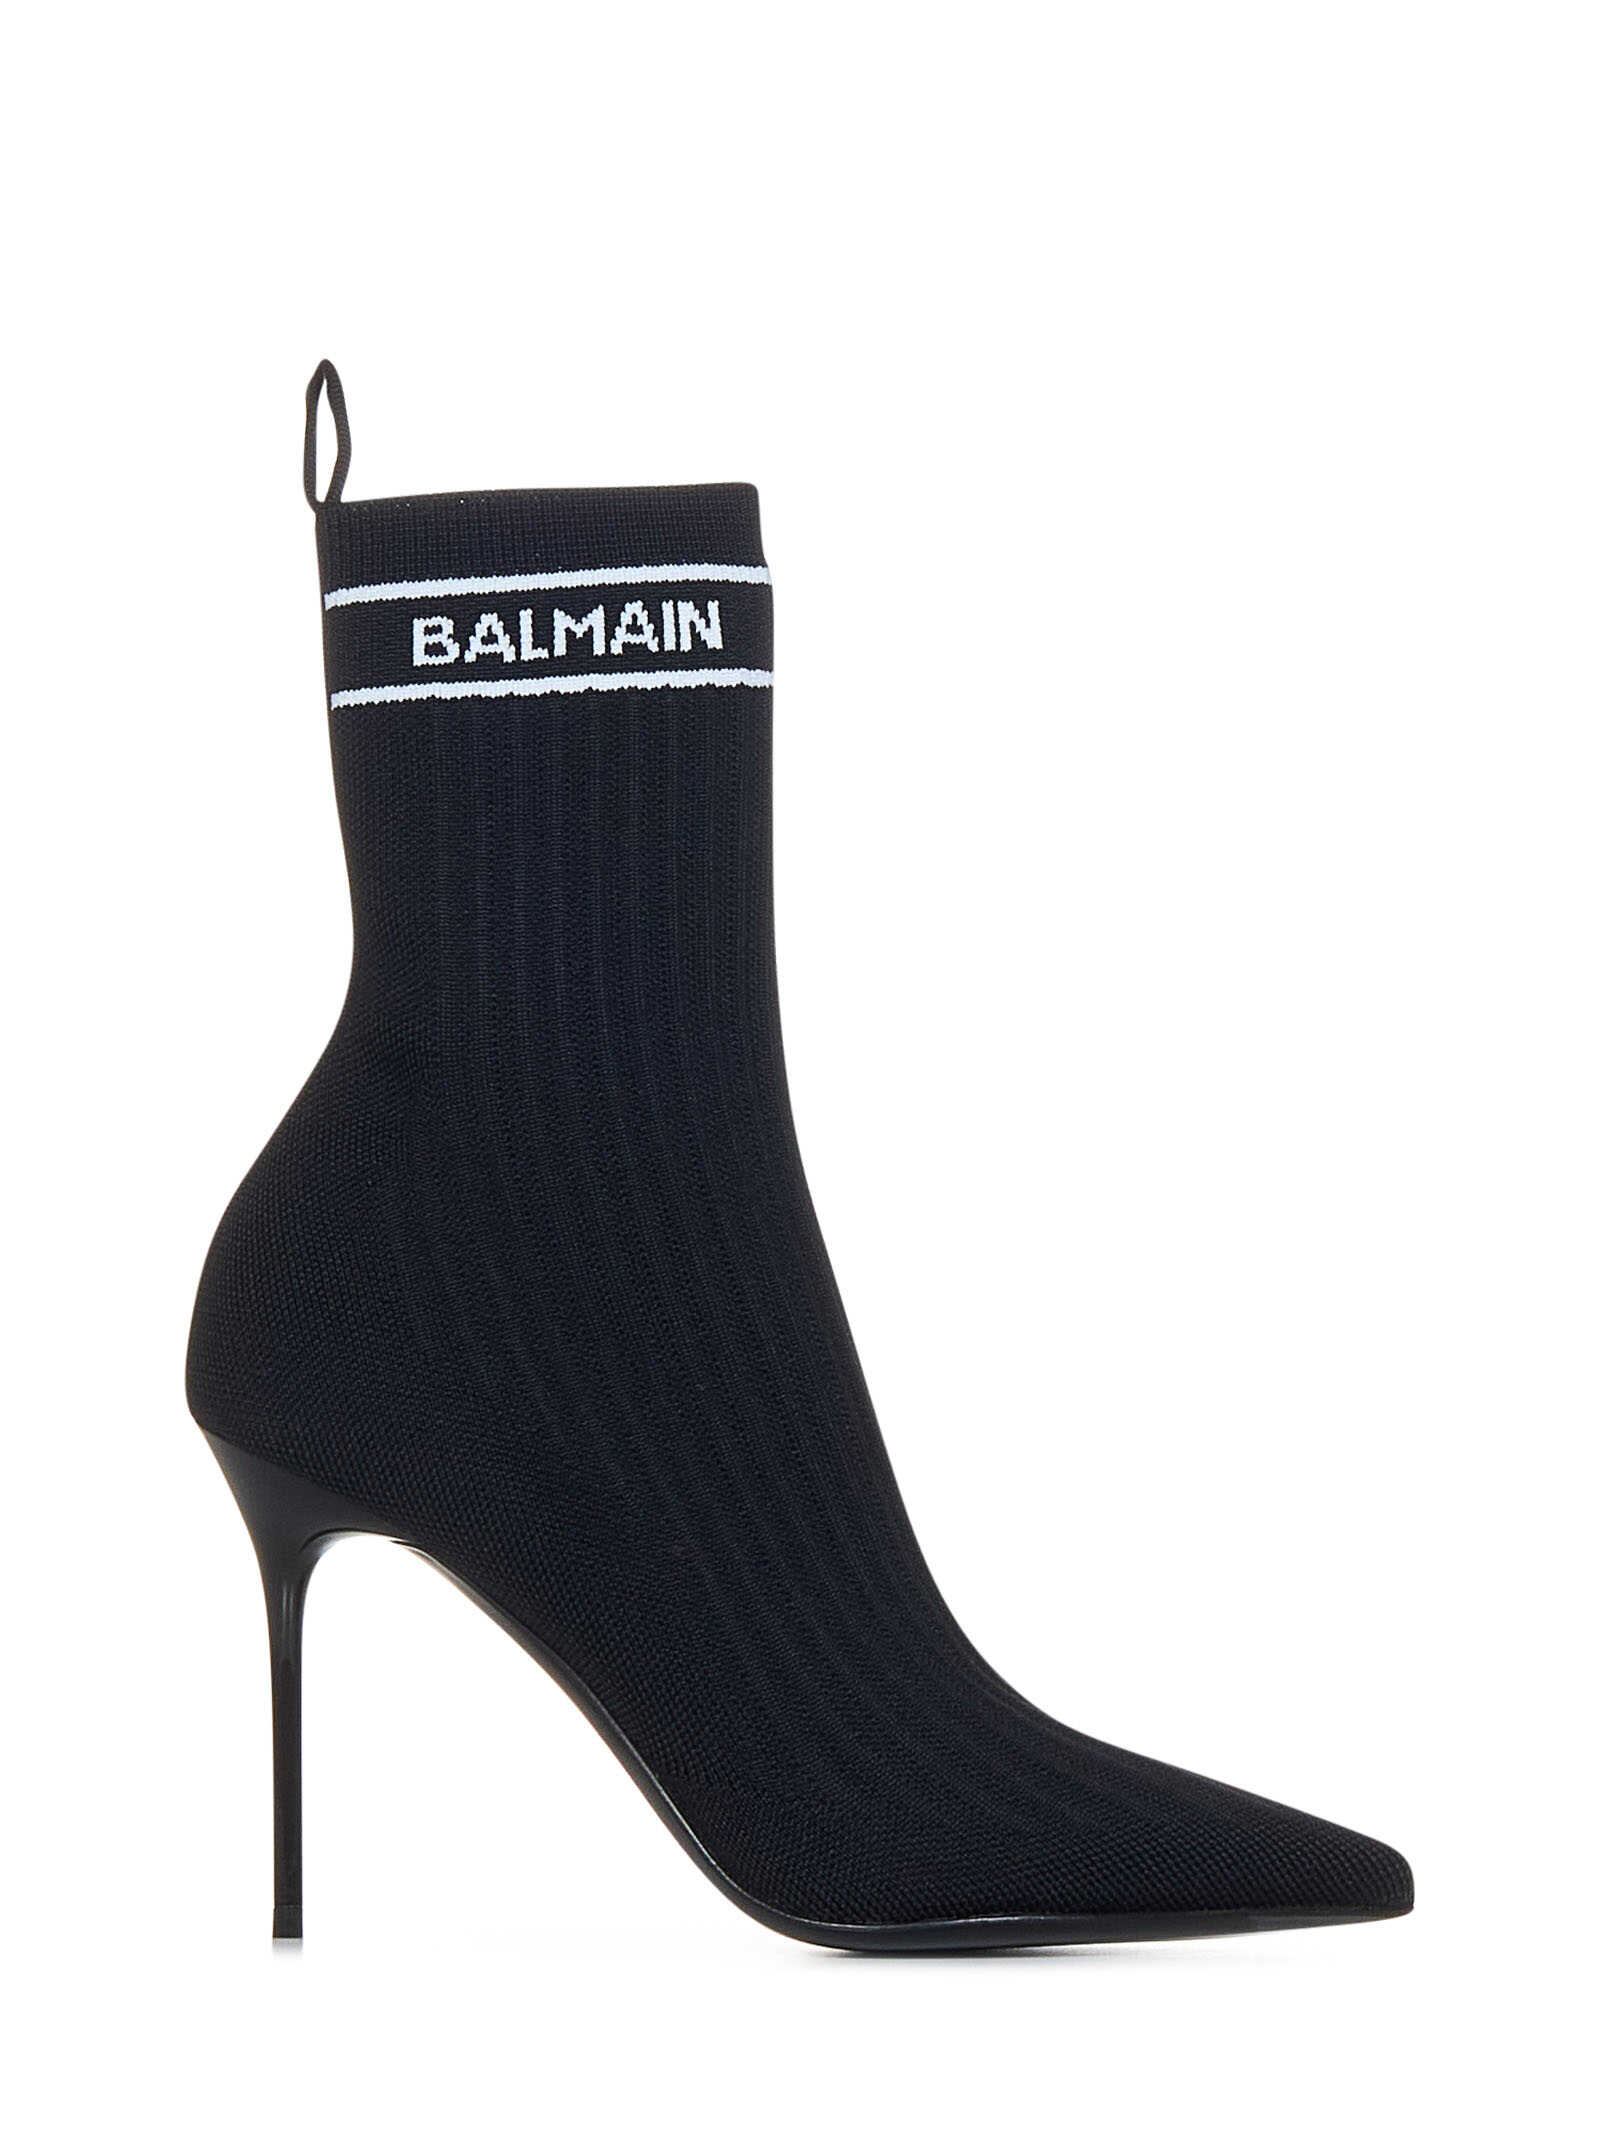 Balmain Boots Black Black image4